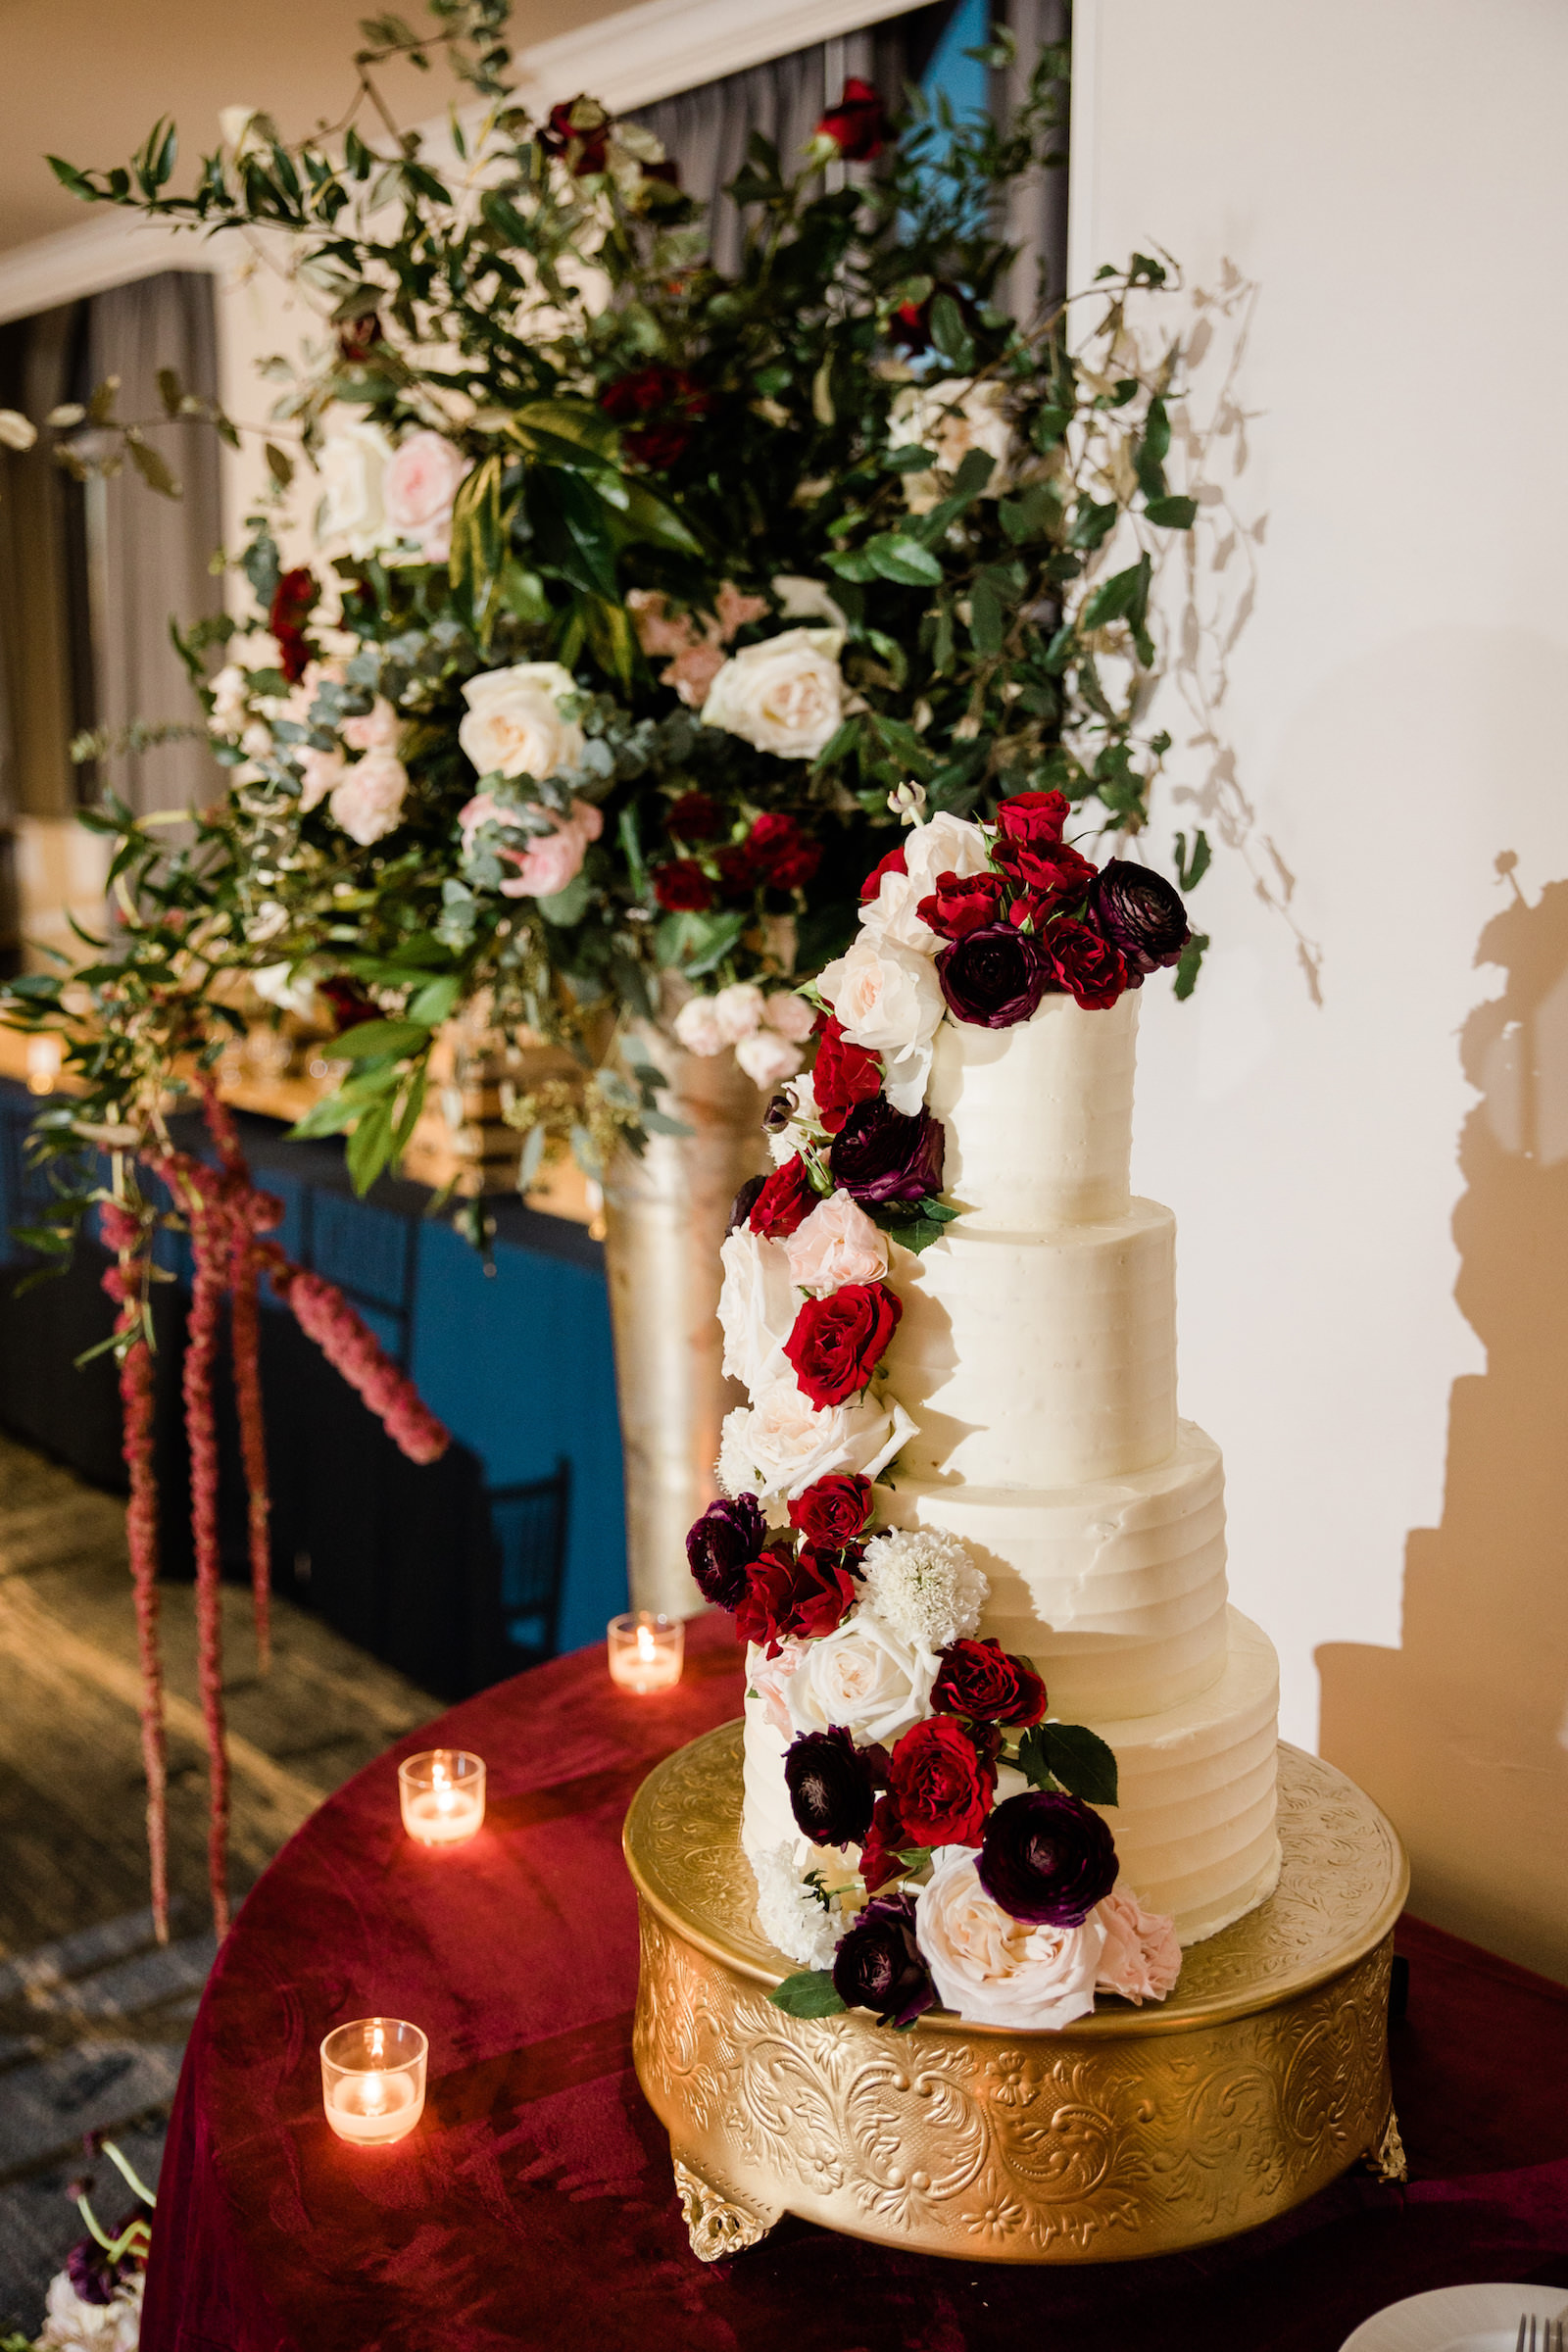 Elegant Navy Wedding, Four Tier Textured Wedding Cake with Cascading Blush Pink, Ivory, and Dark Purple Roses | Tampa Bay Wedding Florist Botanica